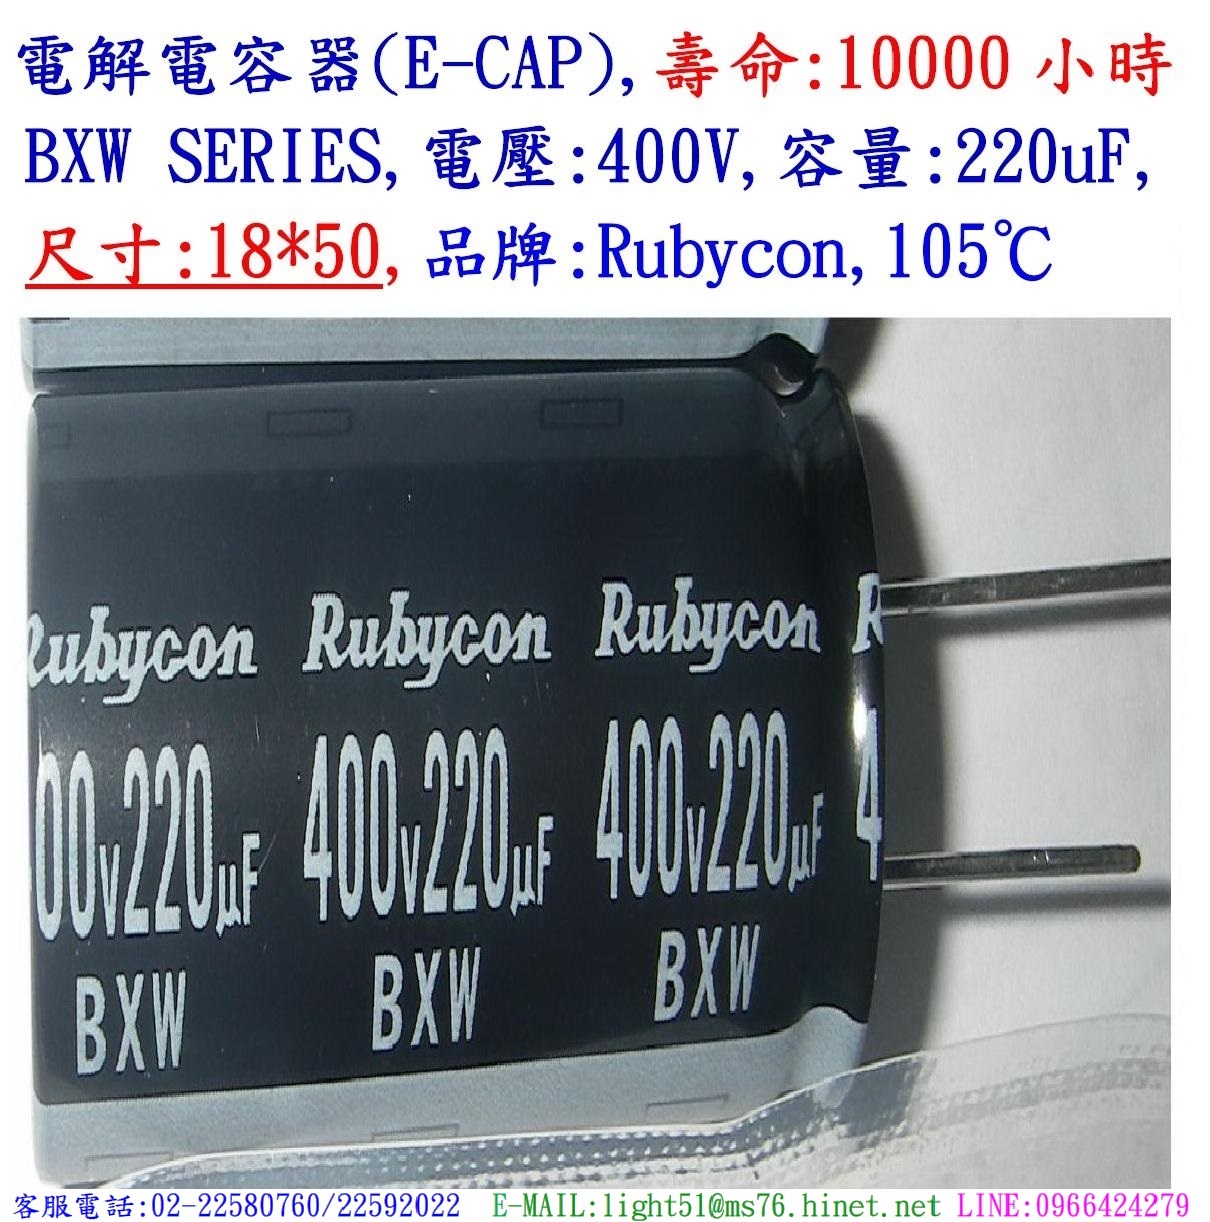 BXW,400V,220uF,尺寸:18*50,電解電容器,壽命:10000小時,Rubycon